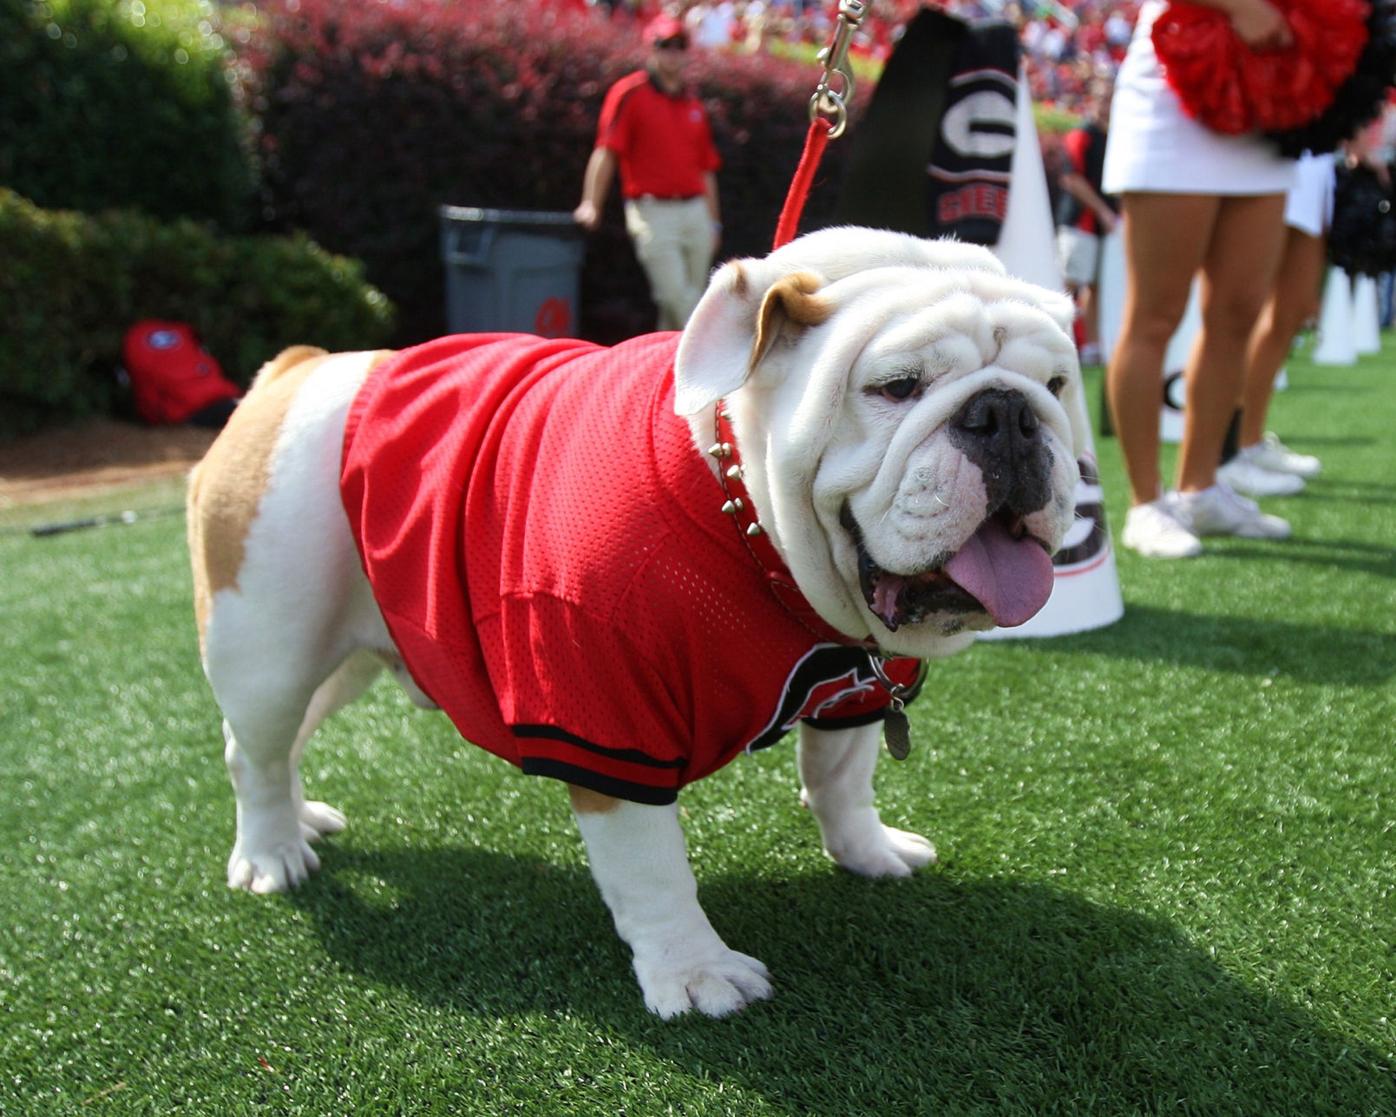 University of Georgia Bulldogs Adjustable Cap: University Of Georgia